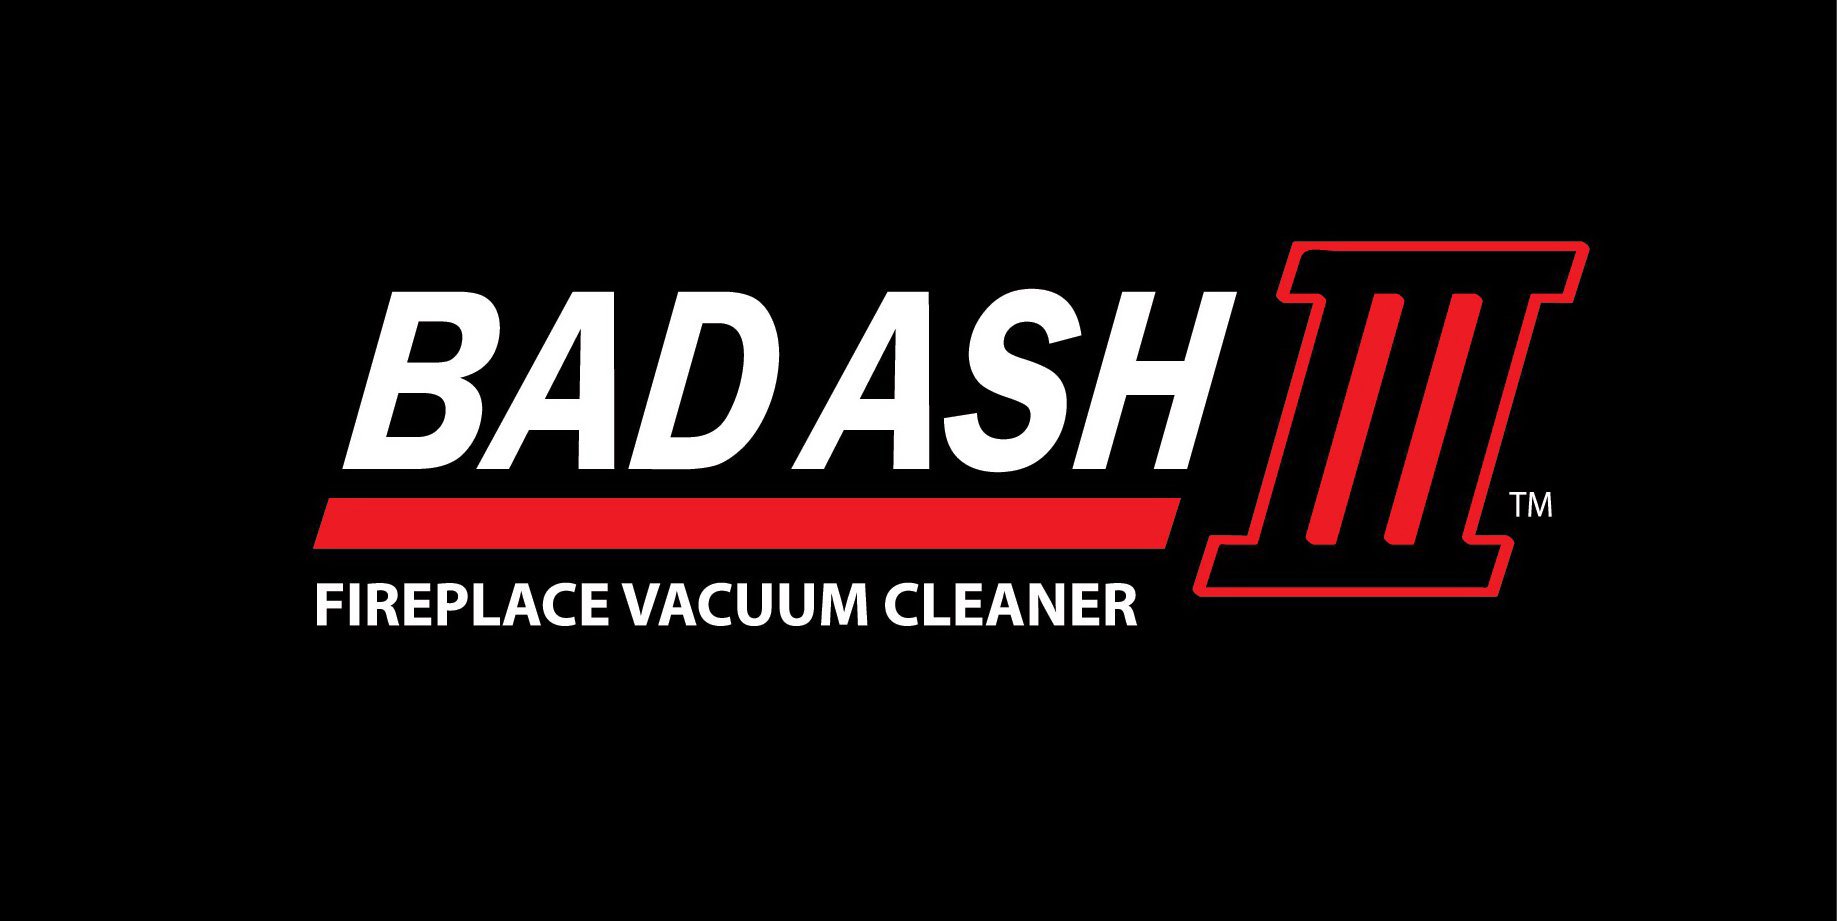  BAD ASH III FIREPLACE VACUUM CLEANER